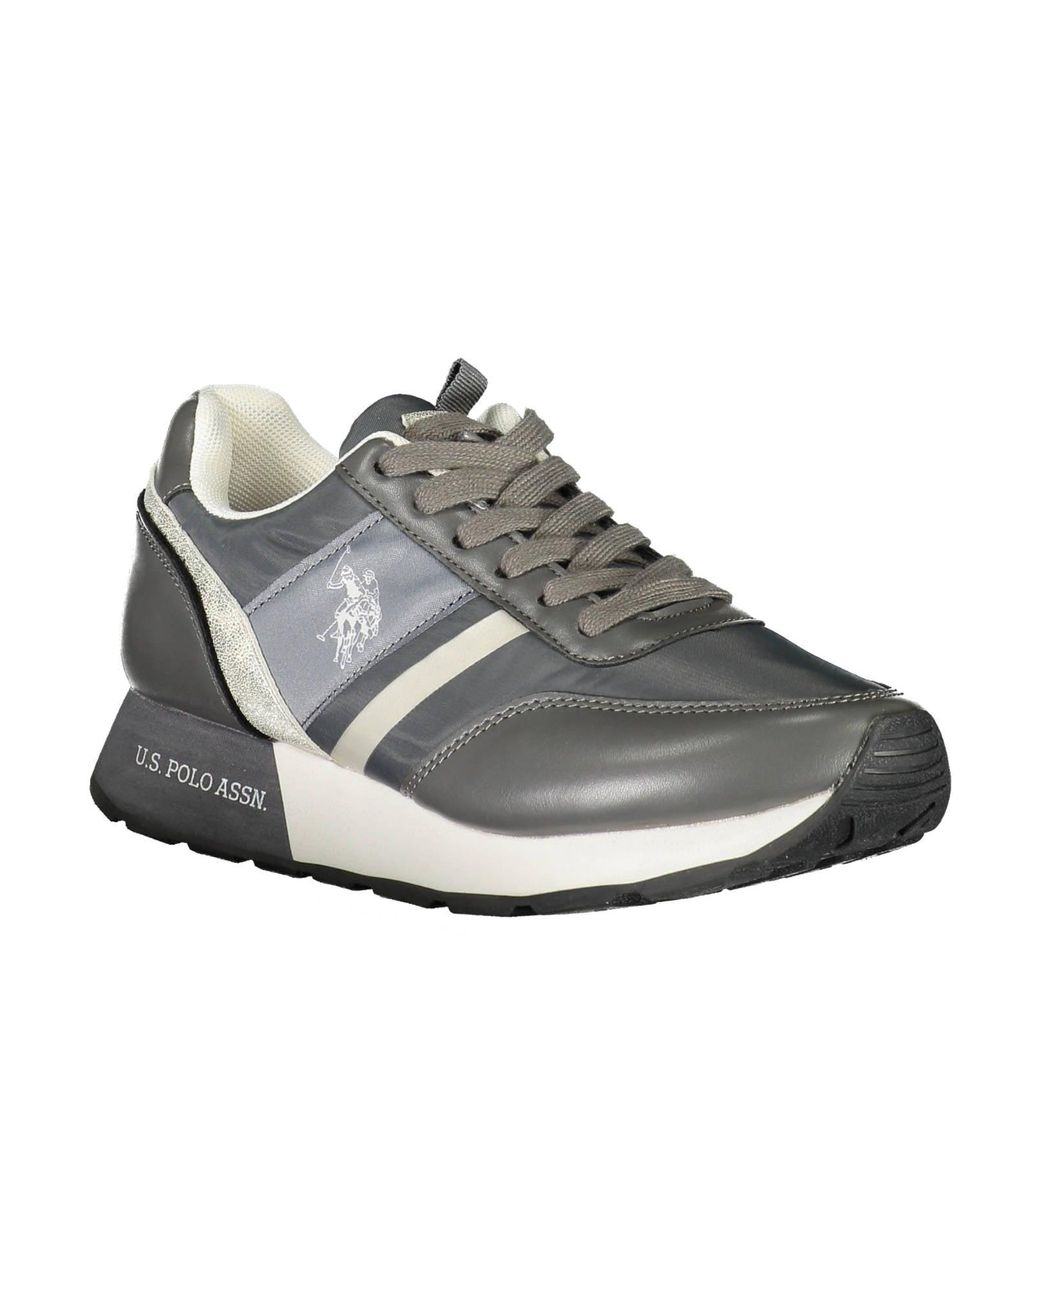 U.S. POLO ASSN. Polyester Sneaker in Gray | Lyst